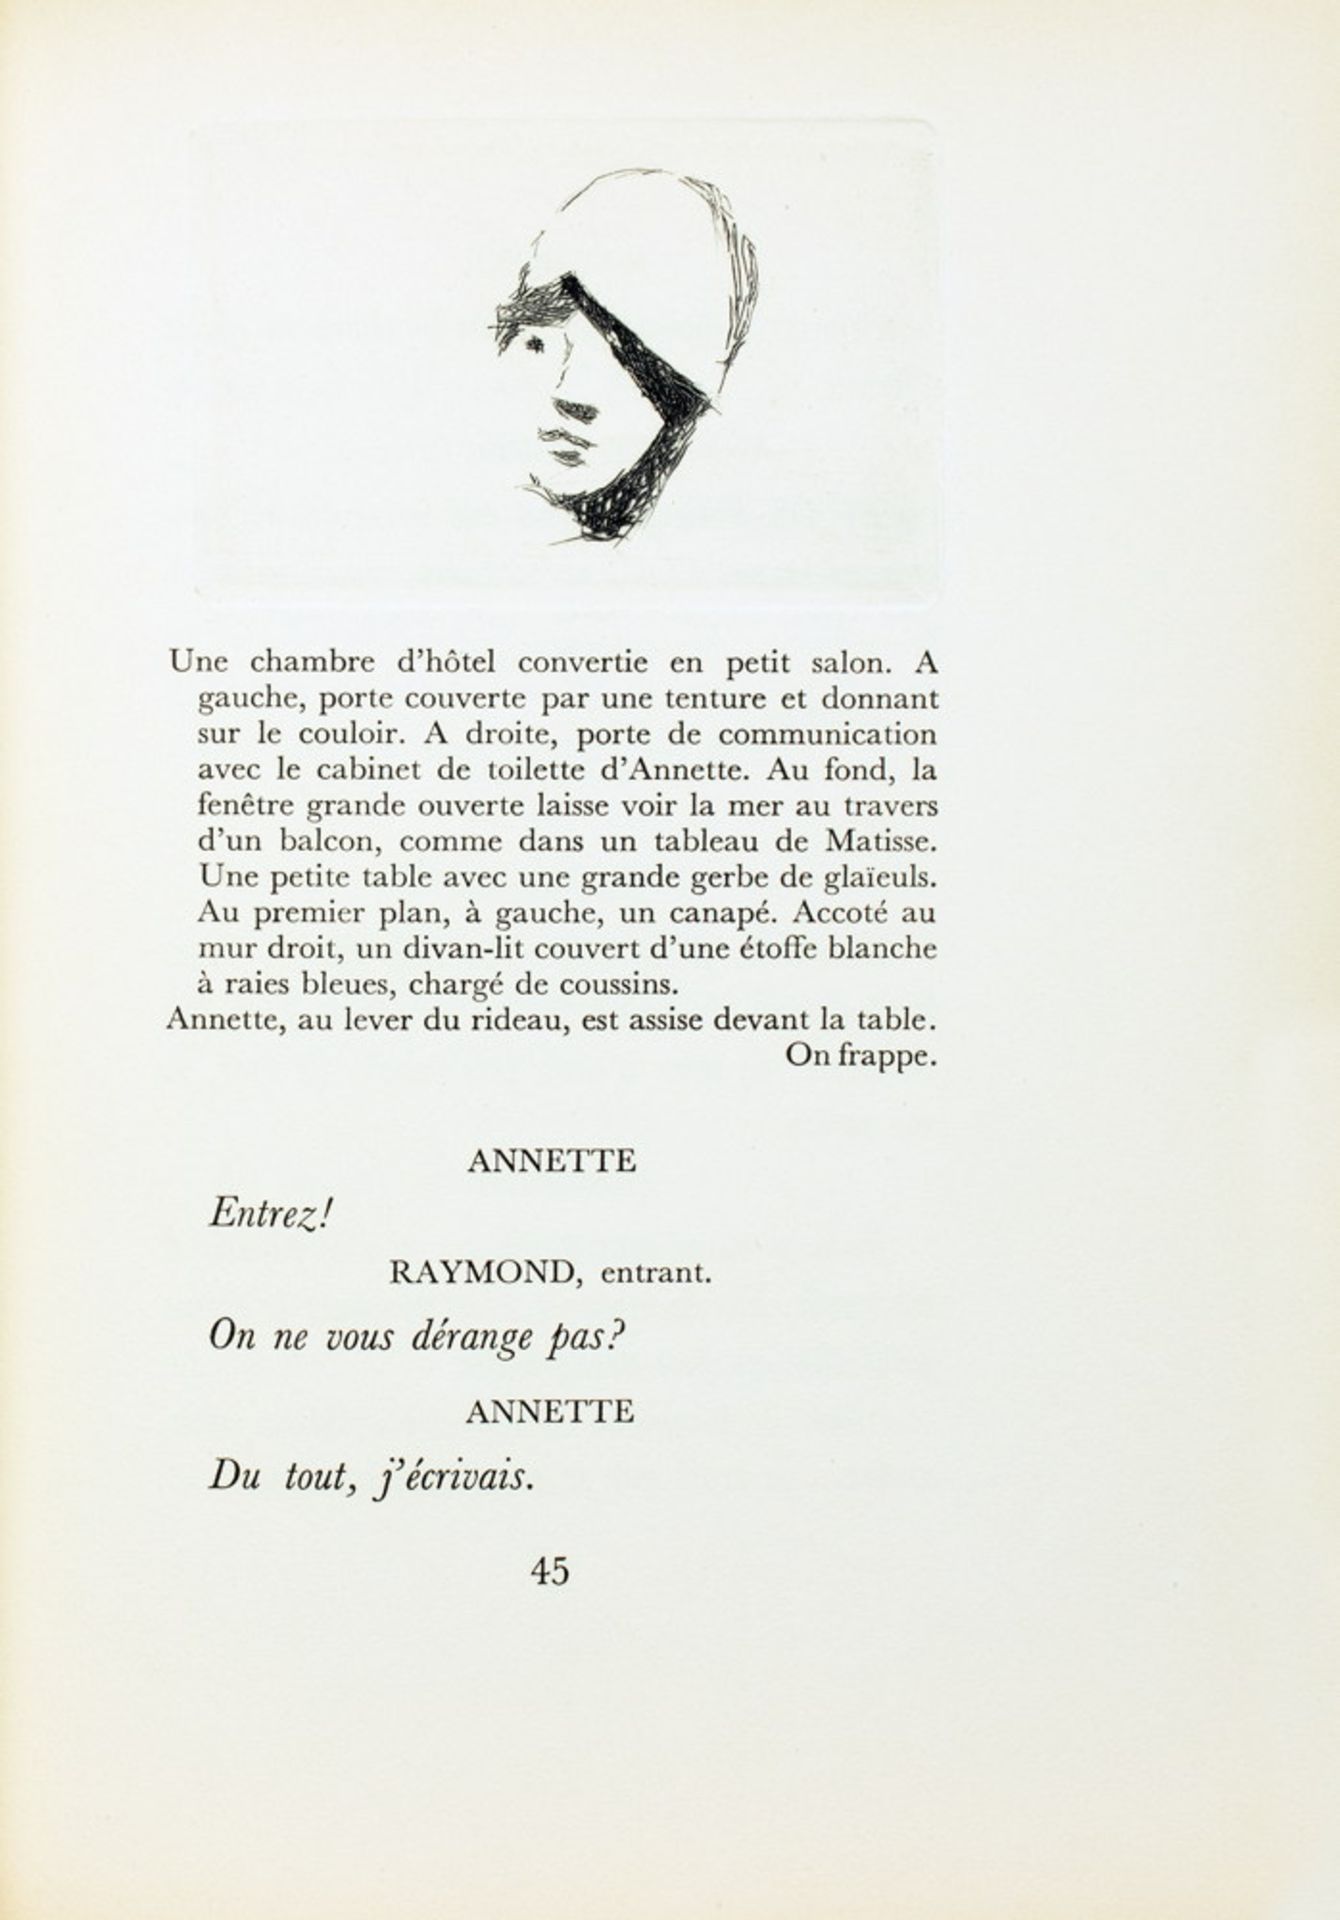 Pierre Bonnard - Claude Roger-Marx. Simili. - Image 3 of 4